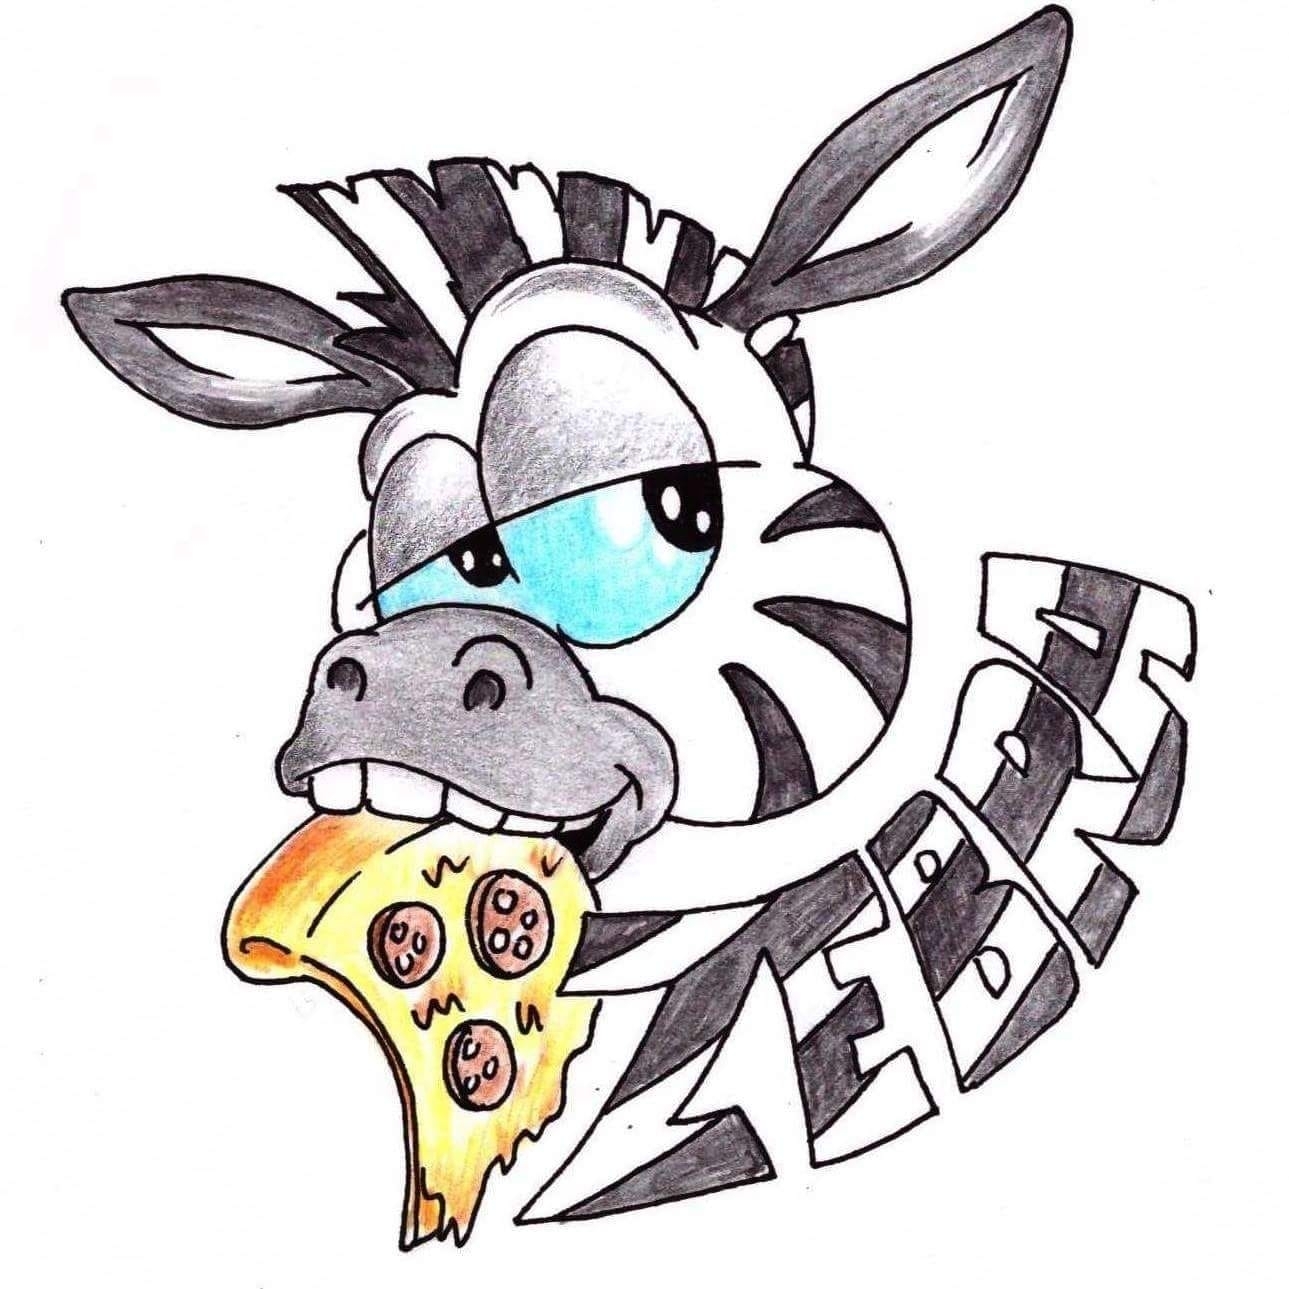 Zebra_logo